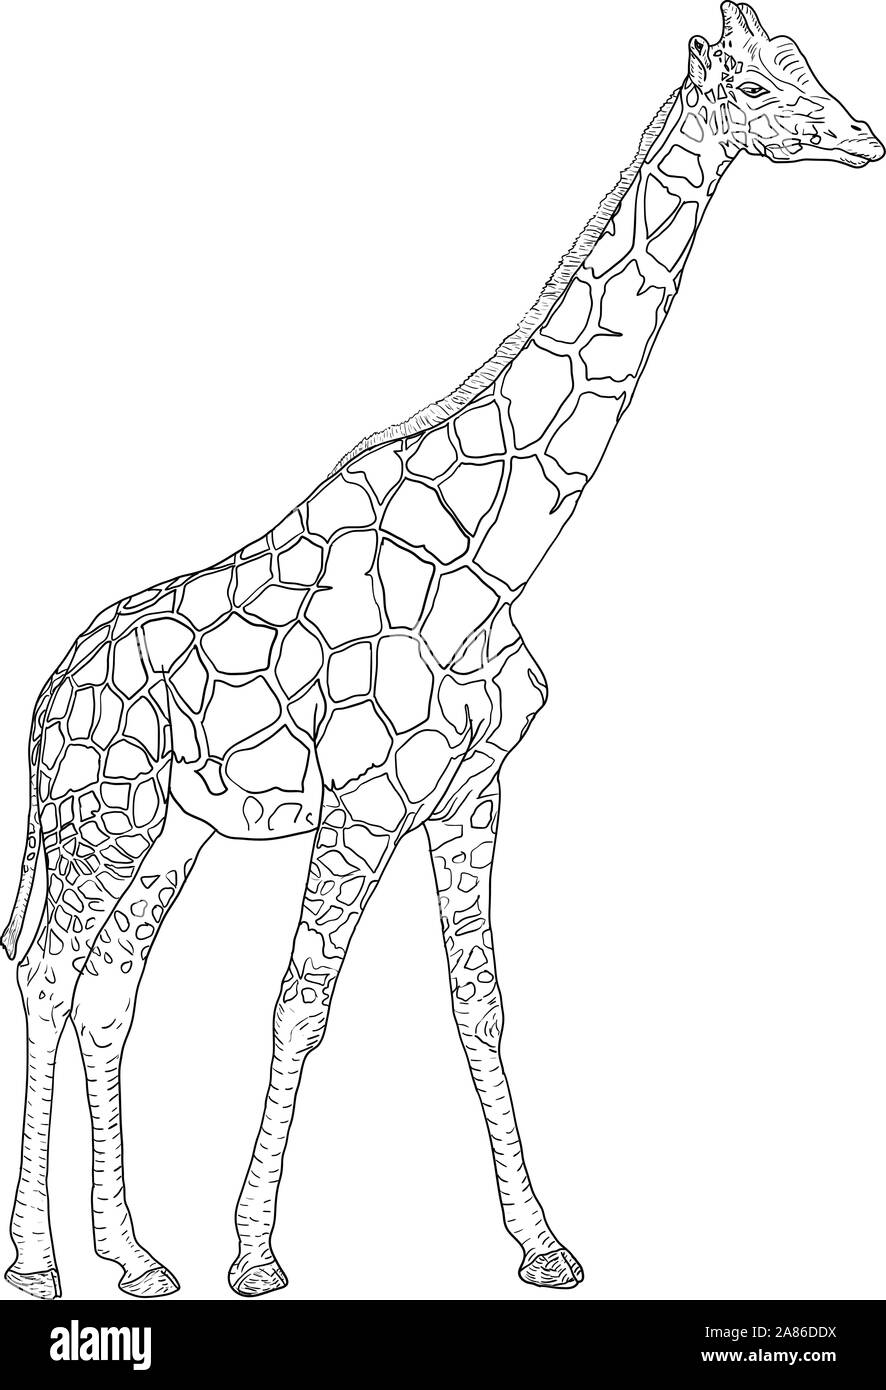 Giraffe Sketch Book: Burnett, Suzanne: Amazon.com: Books-anthinhphatland.vn